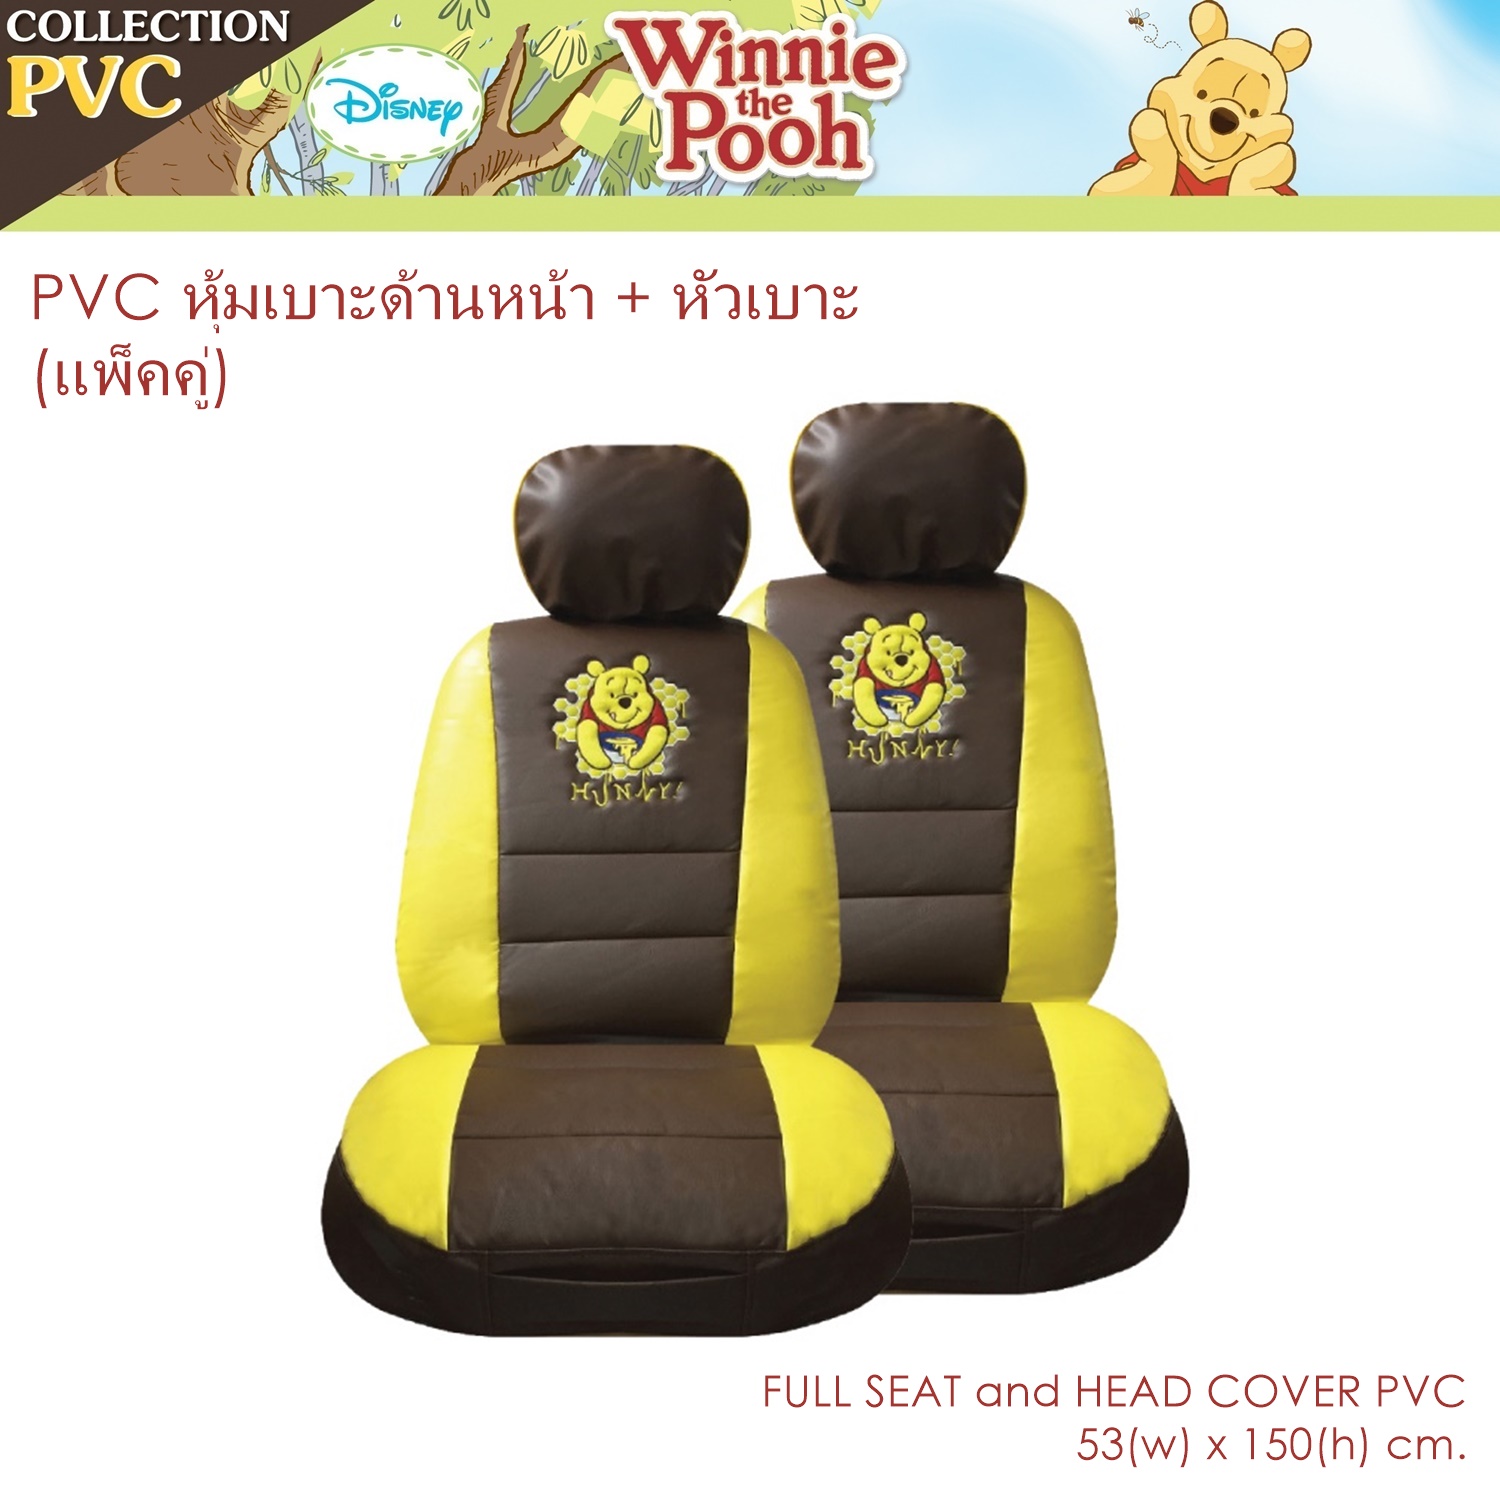 PVC Pooh Smile หุ้มเบาะหนัง พร้อมหัวเบาะ แพ็คคู่ รวม 4 ชิ้น งาน PVC สีแดง-ดำ ลิขสิทธิ์แท้